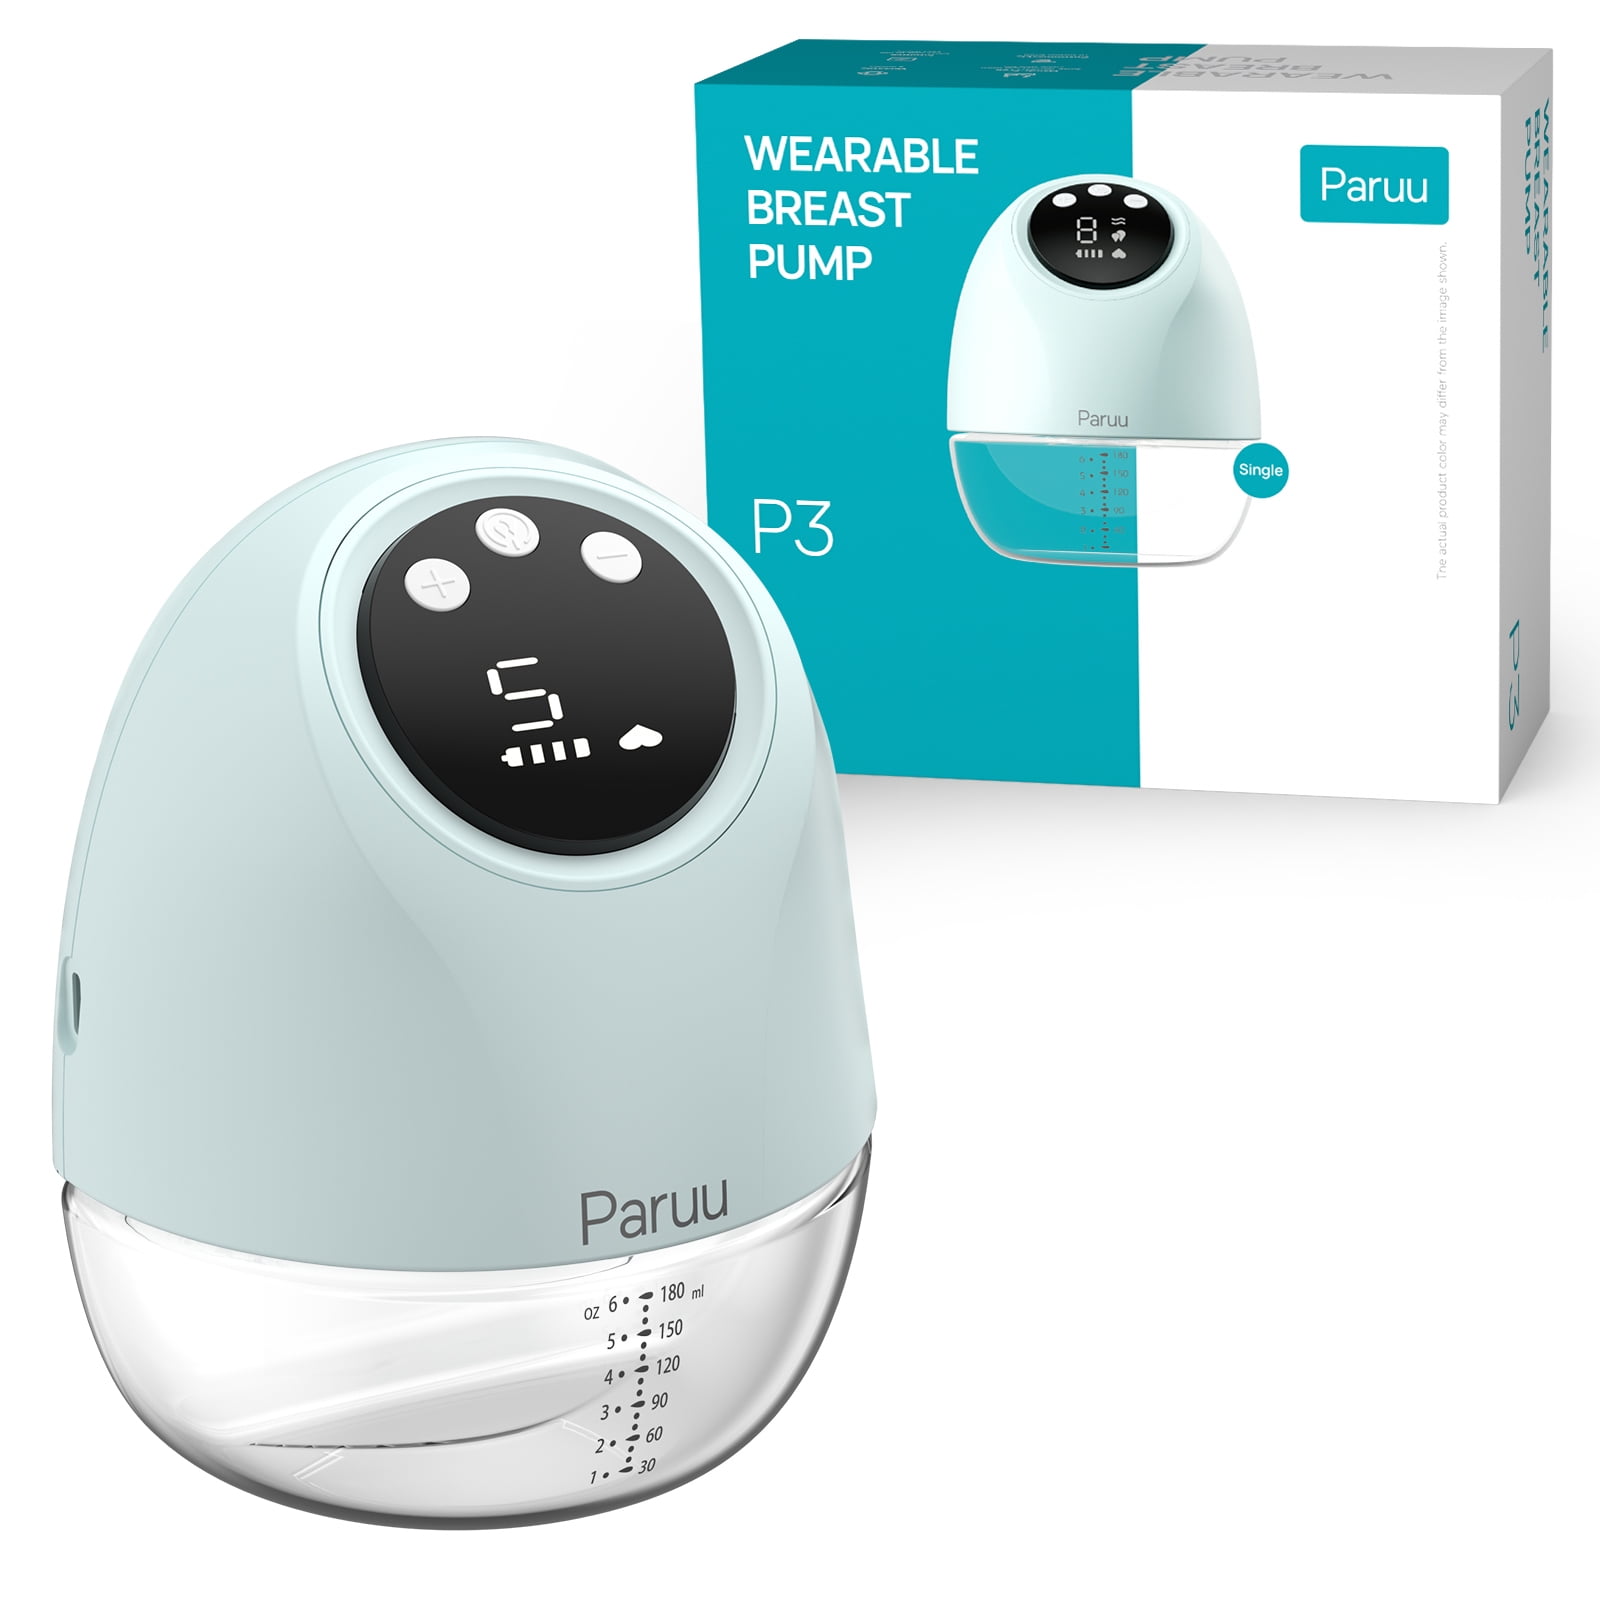 Paruu Hands Free Breast Pump Wearable, P3 Electric Portable Breast Pump ...